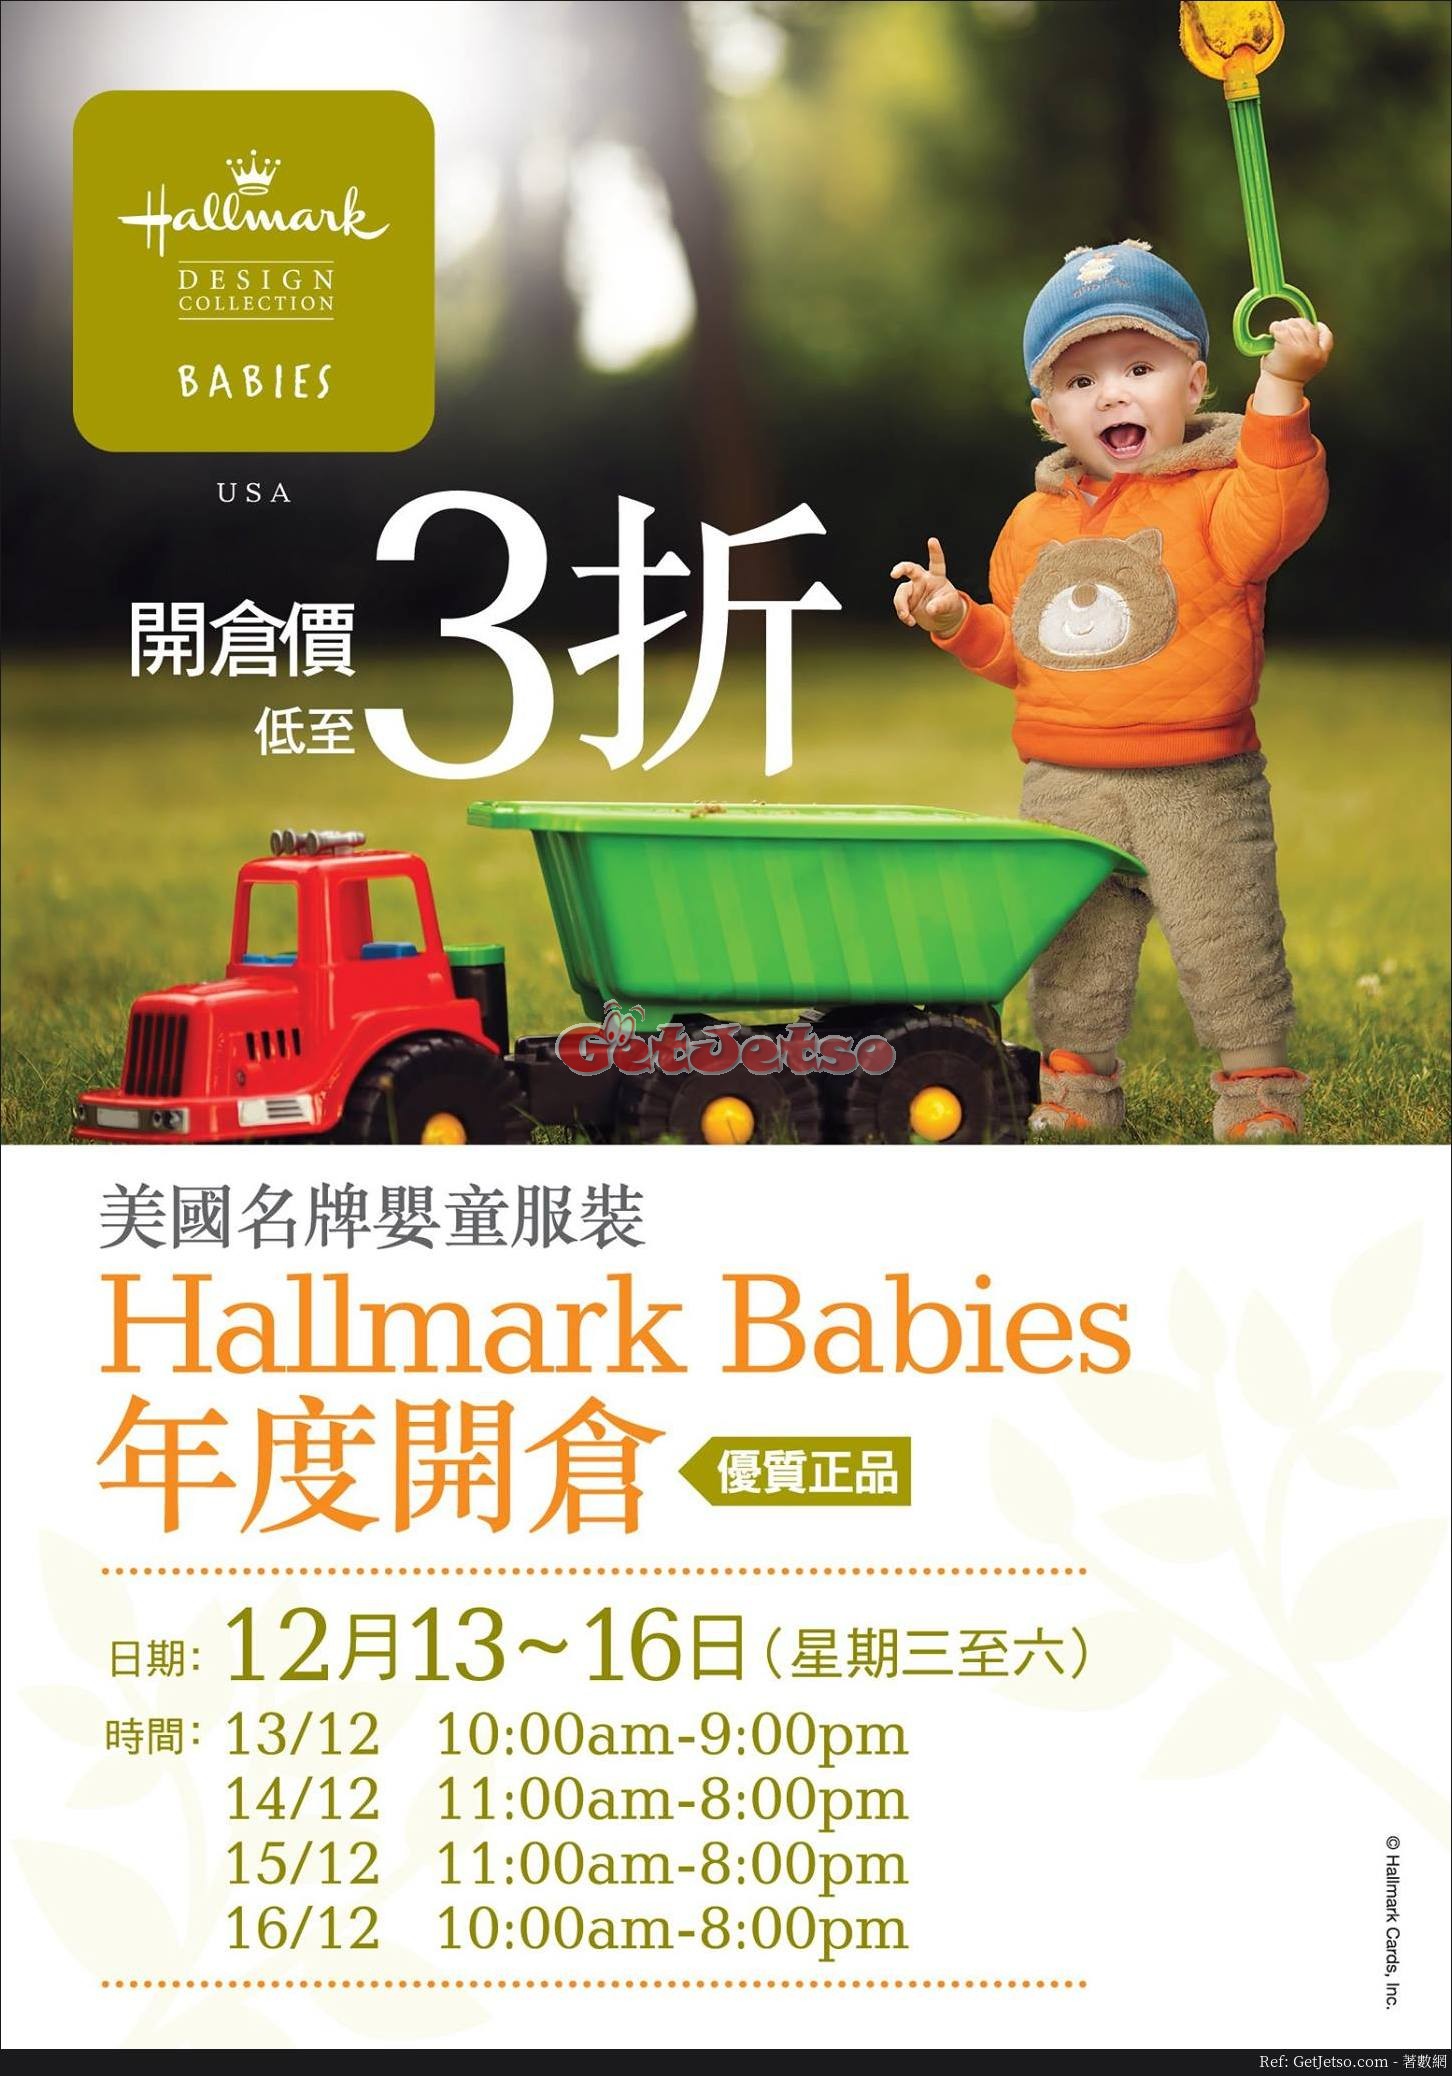 Hallmark Babies 低至3折開倉優惠(17年12月13-16日)圖片1